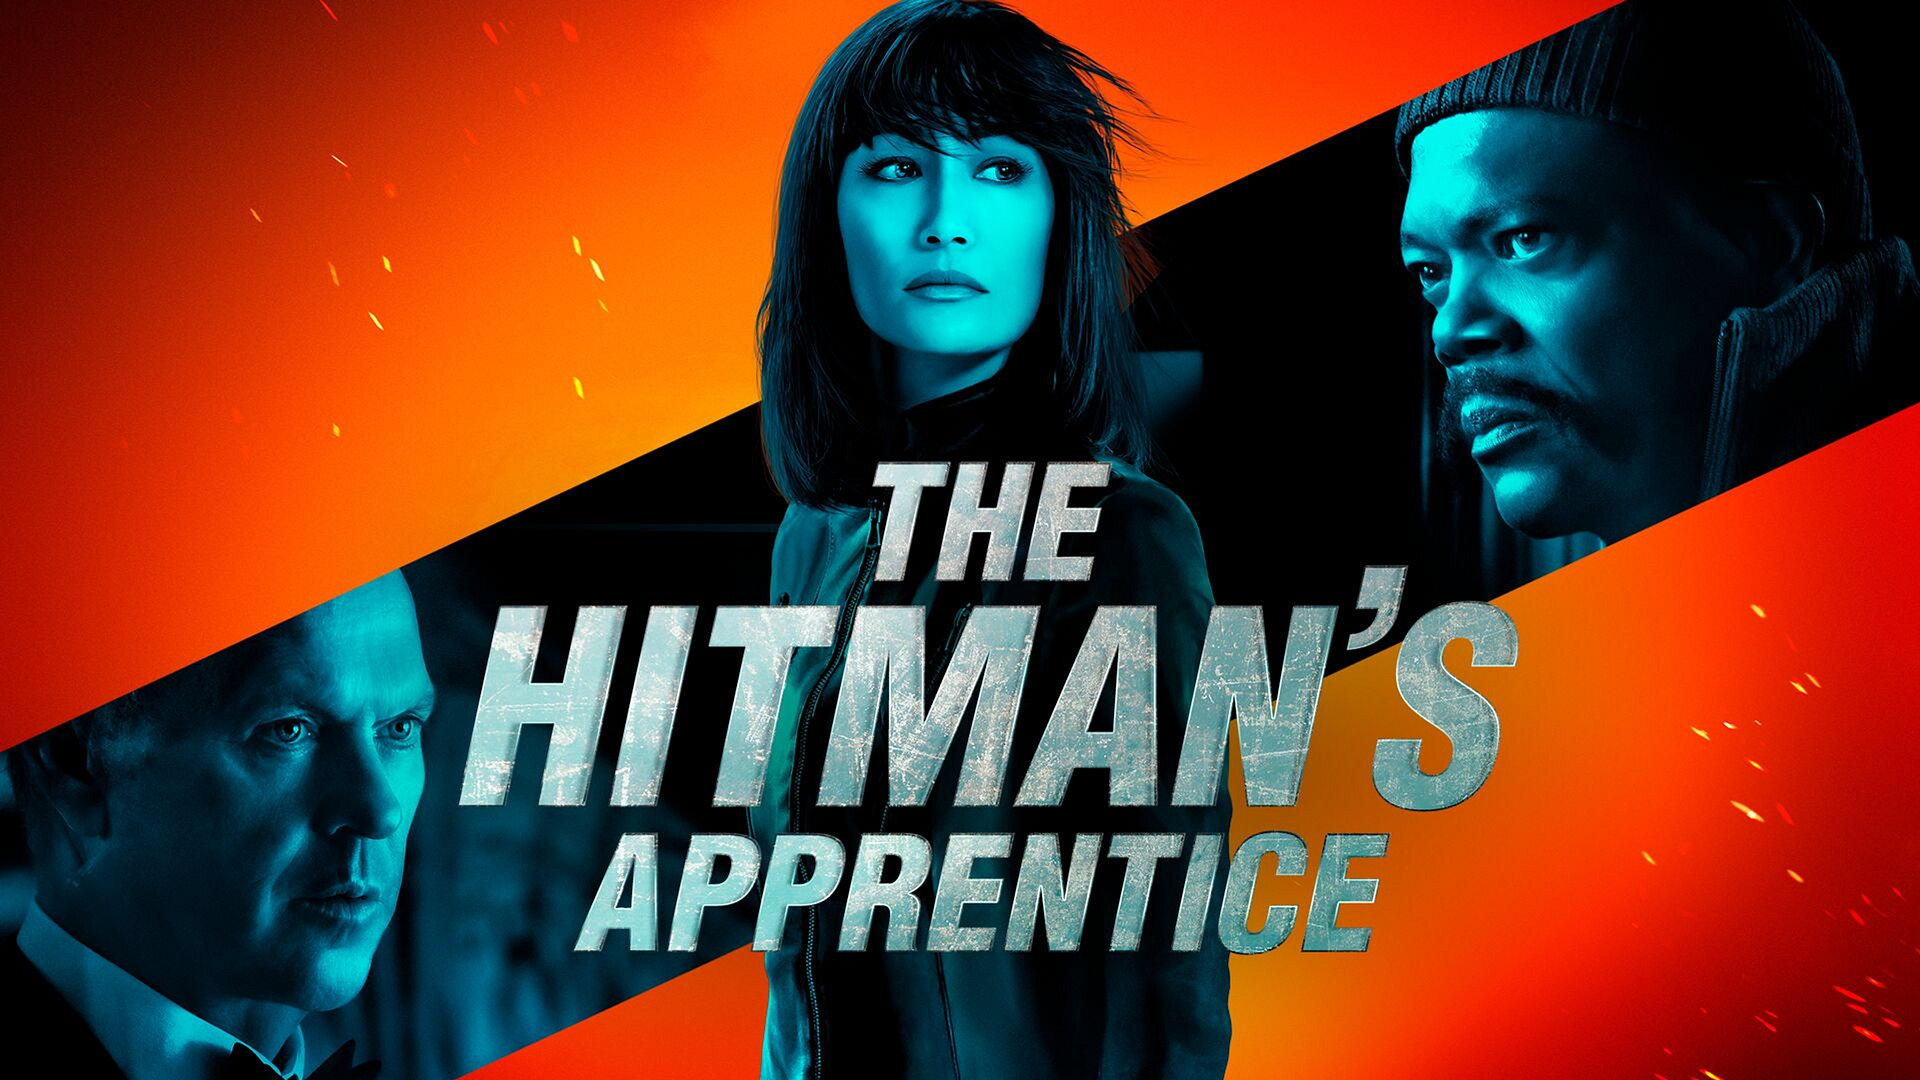 The Hitman’s Apprentice